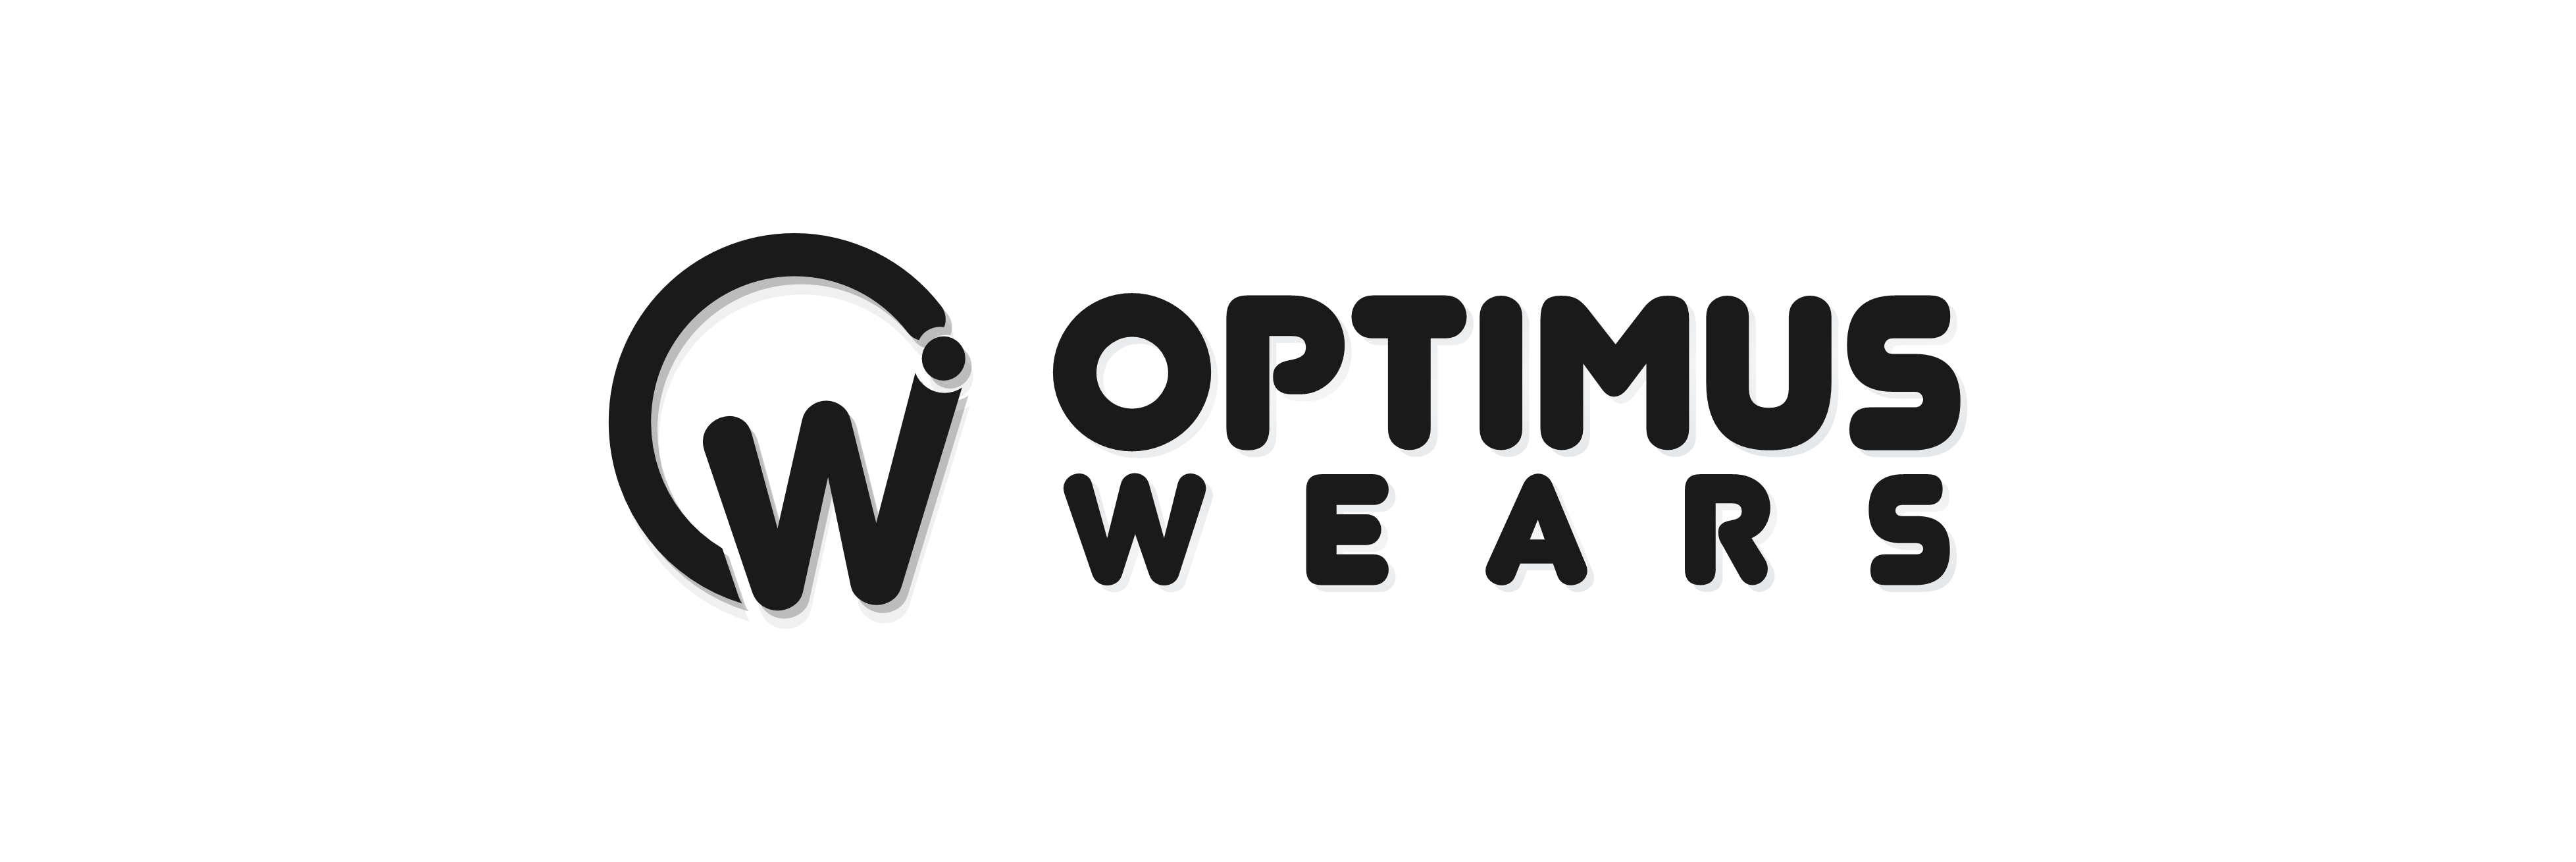 optimuswears logo